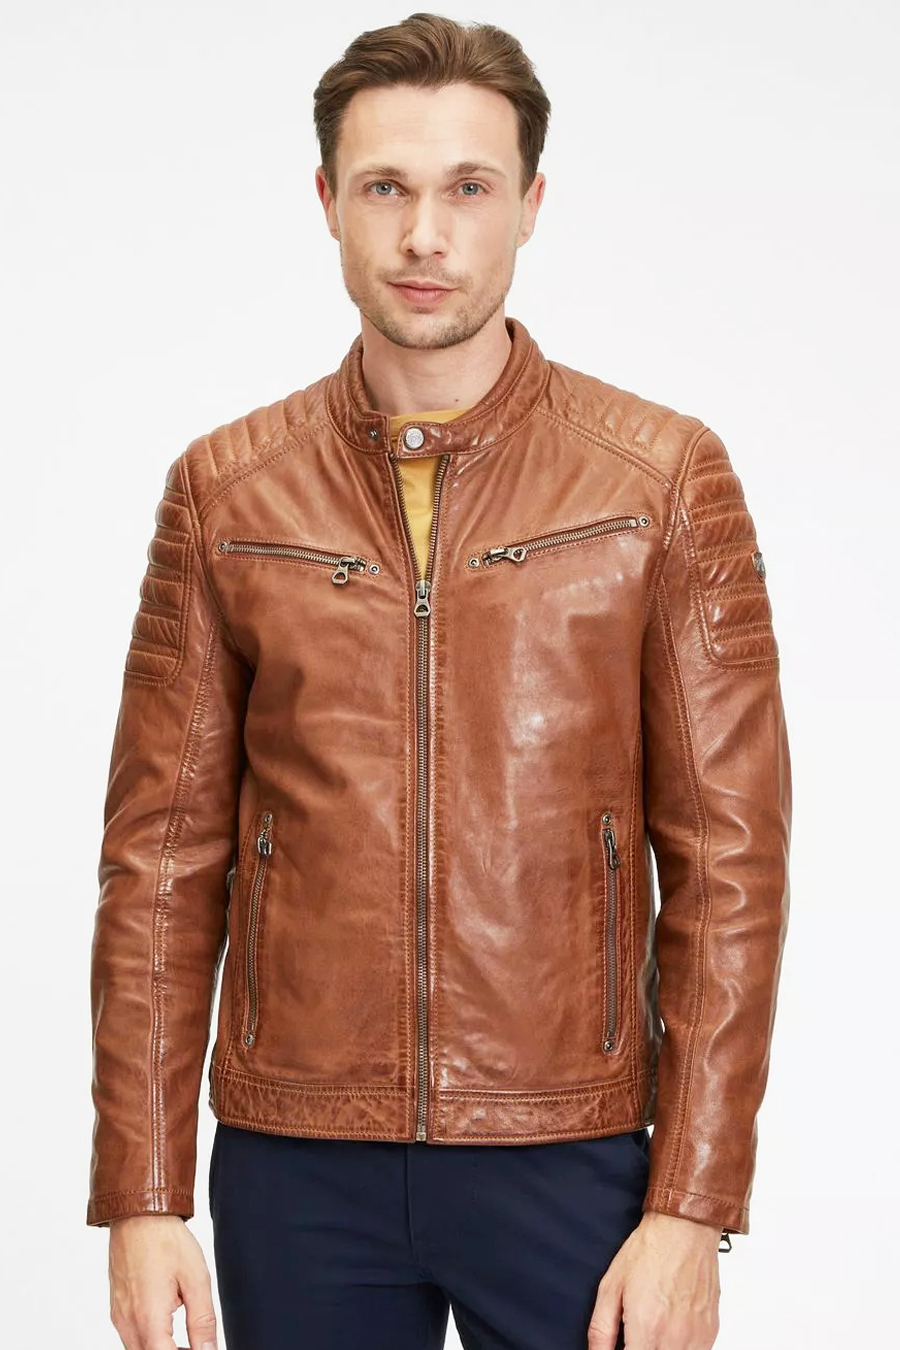 Leather jacket GIPSY GMChesto-LAORV-cognac